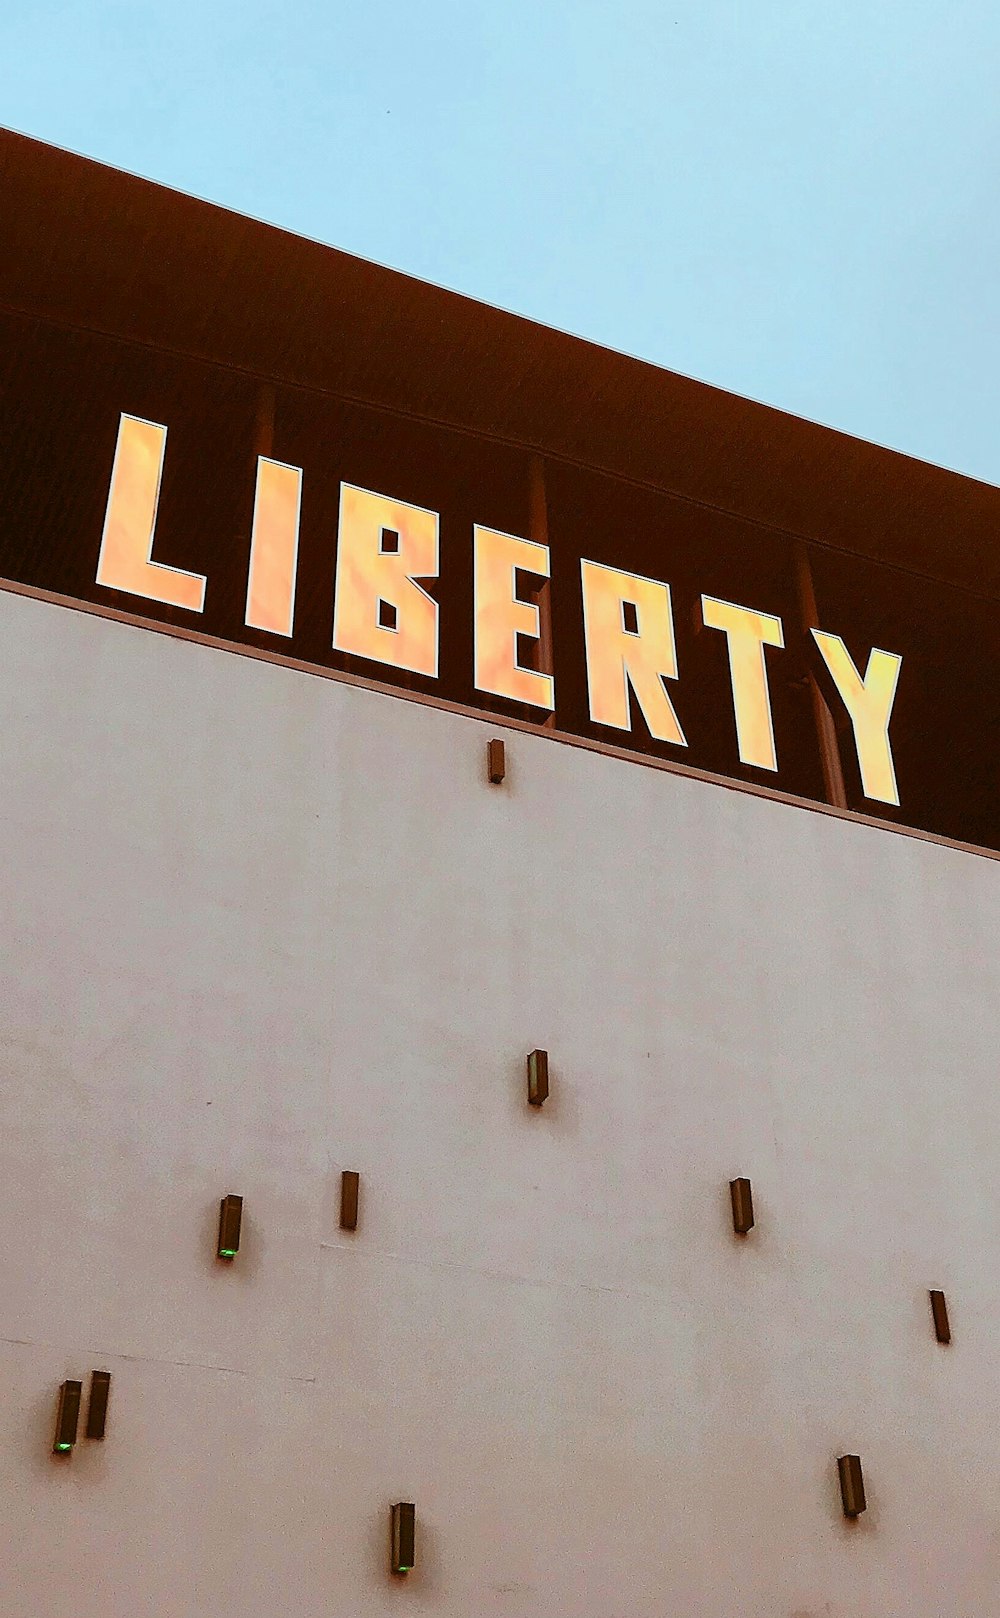 Liberty signage at the building wall